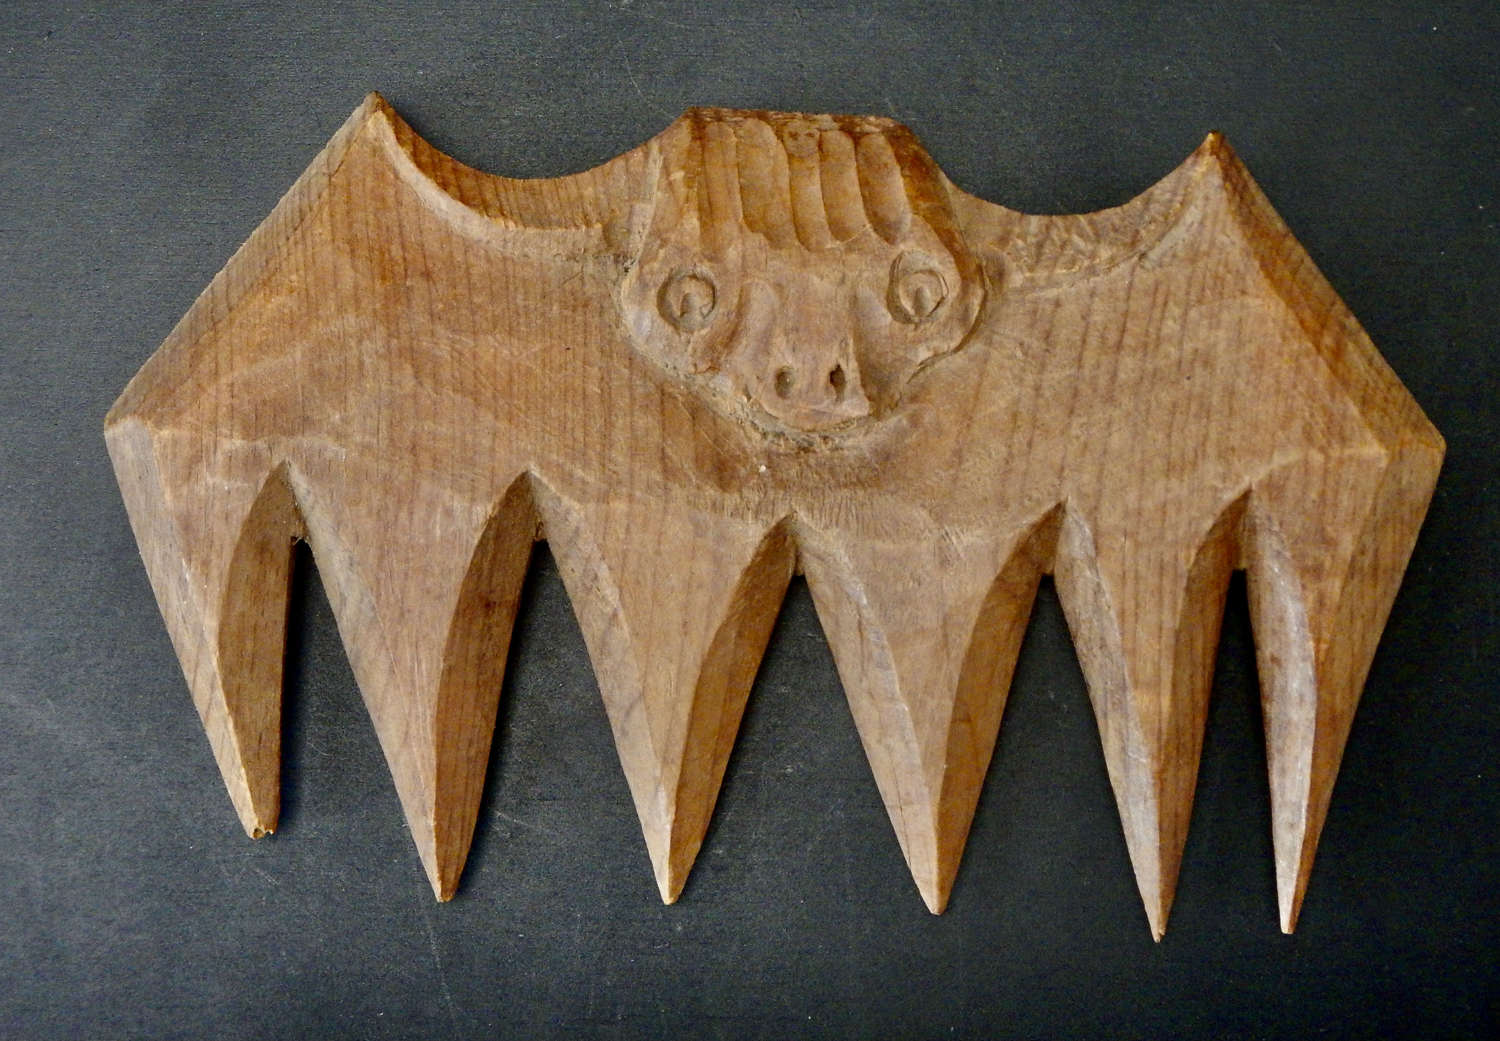 Vintage French Wooden Bat Carving, Sculpture - Vespertilio